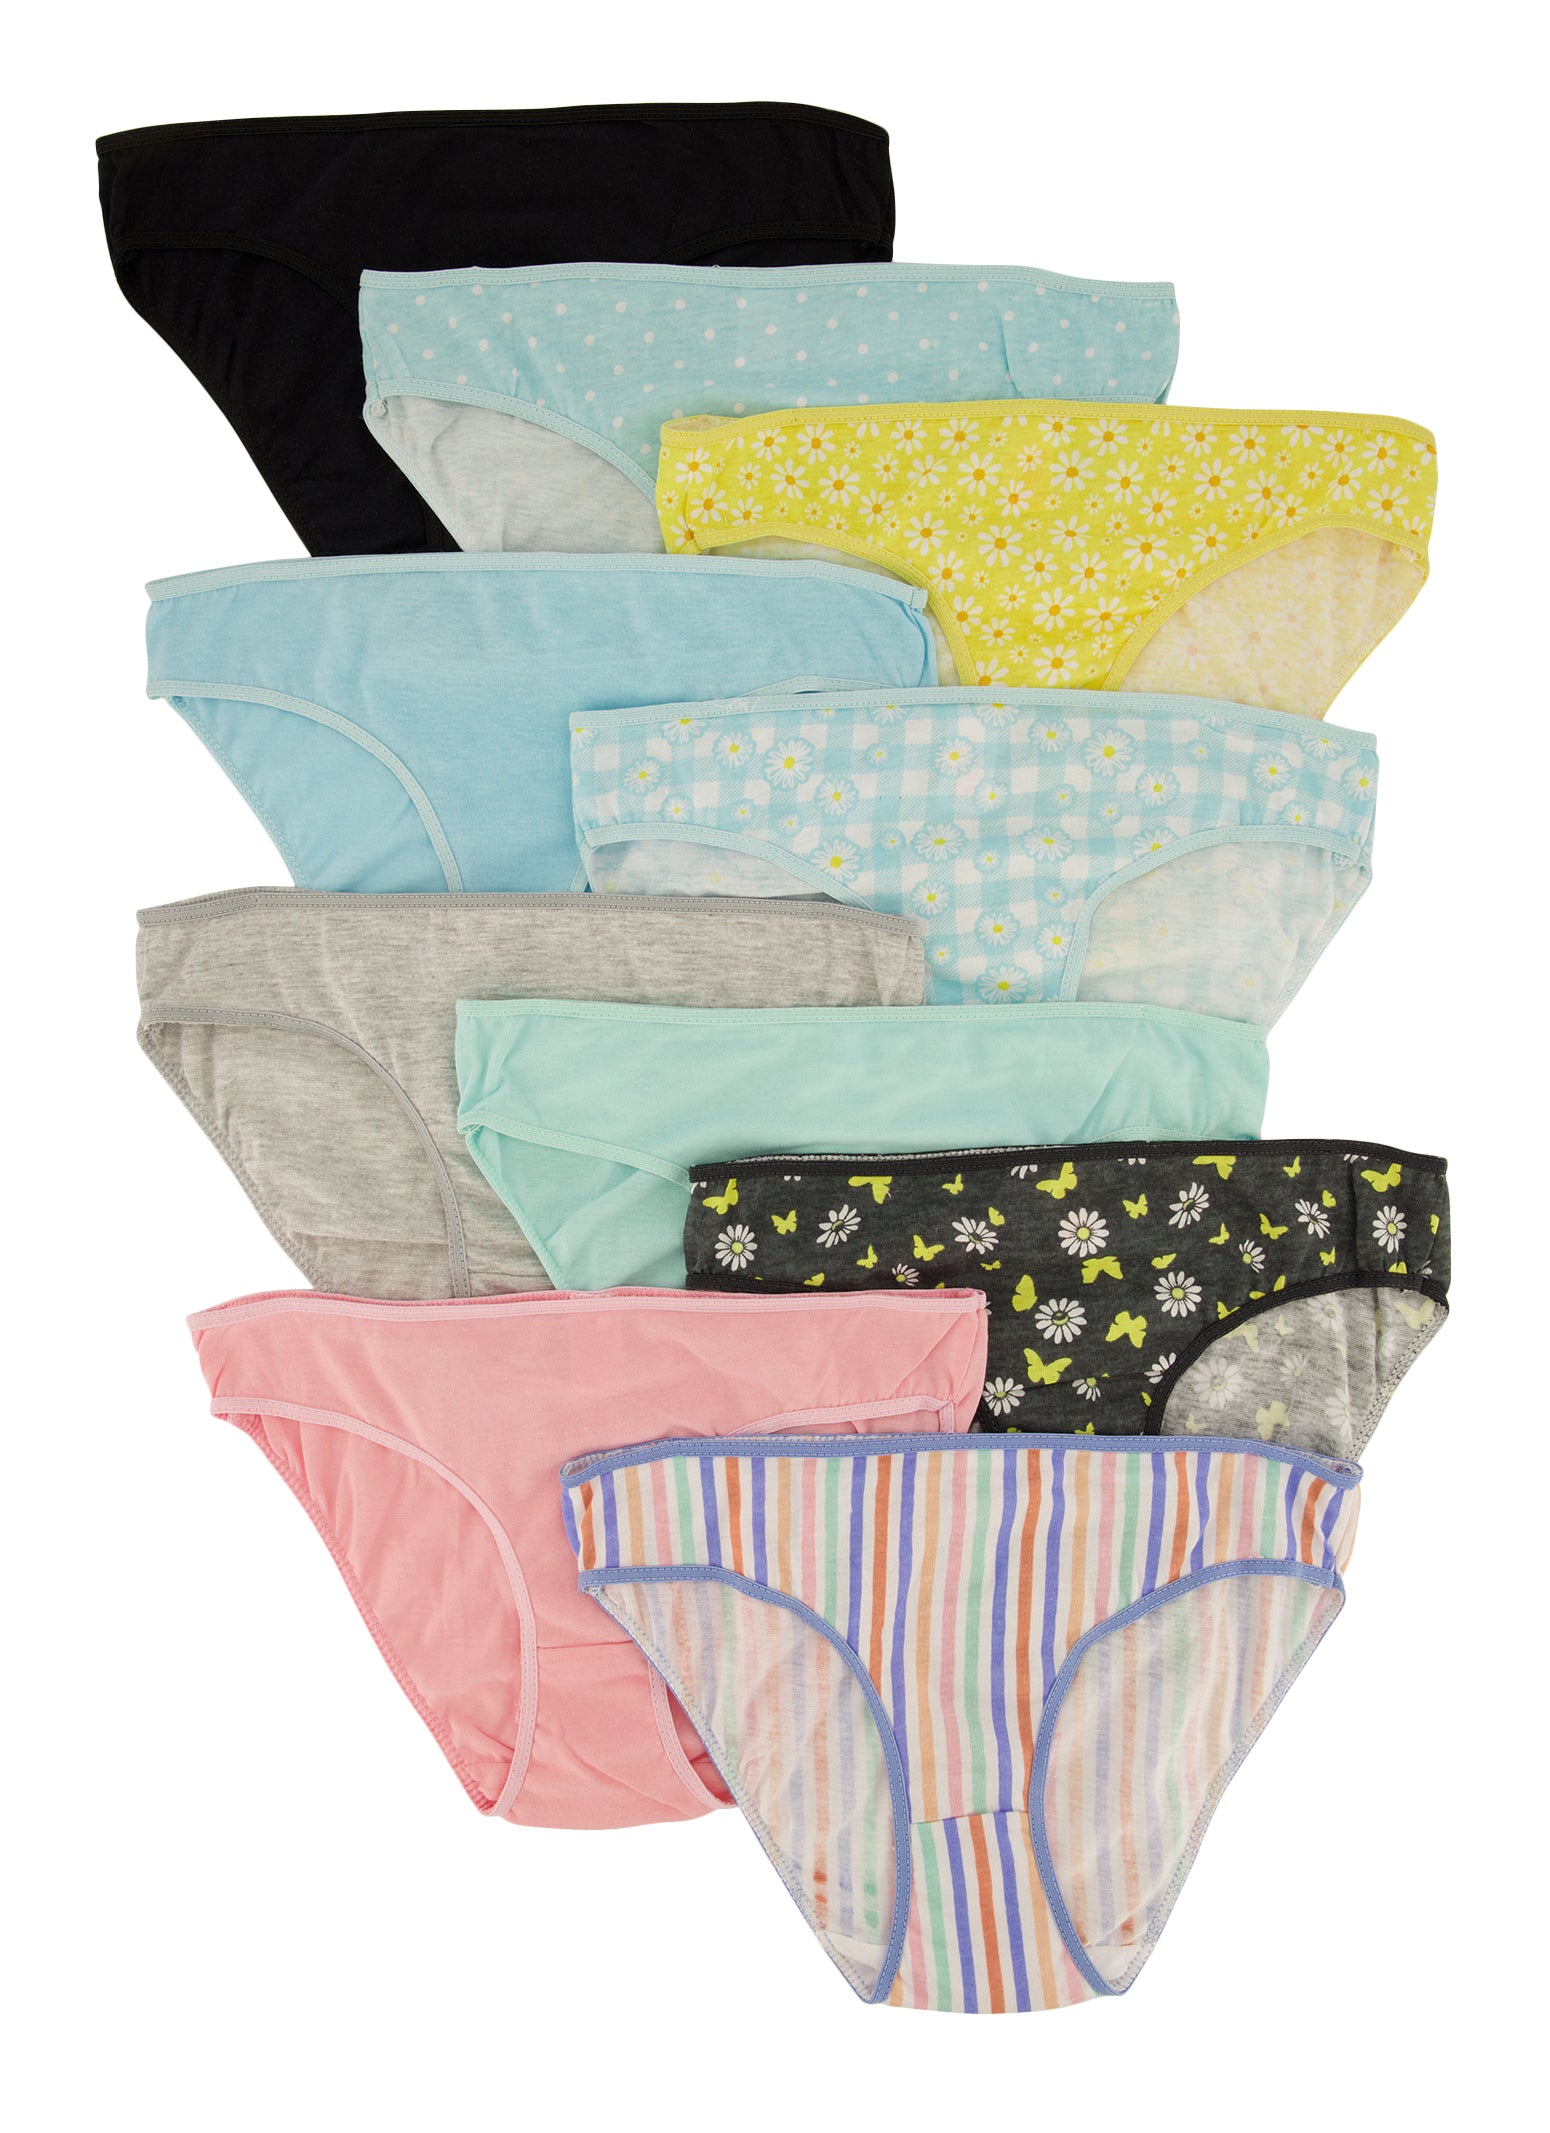 Girls 10 Pack Assorted Floral Print Panties - Multi Color